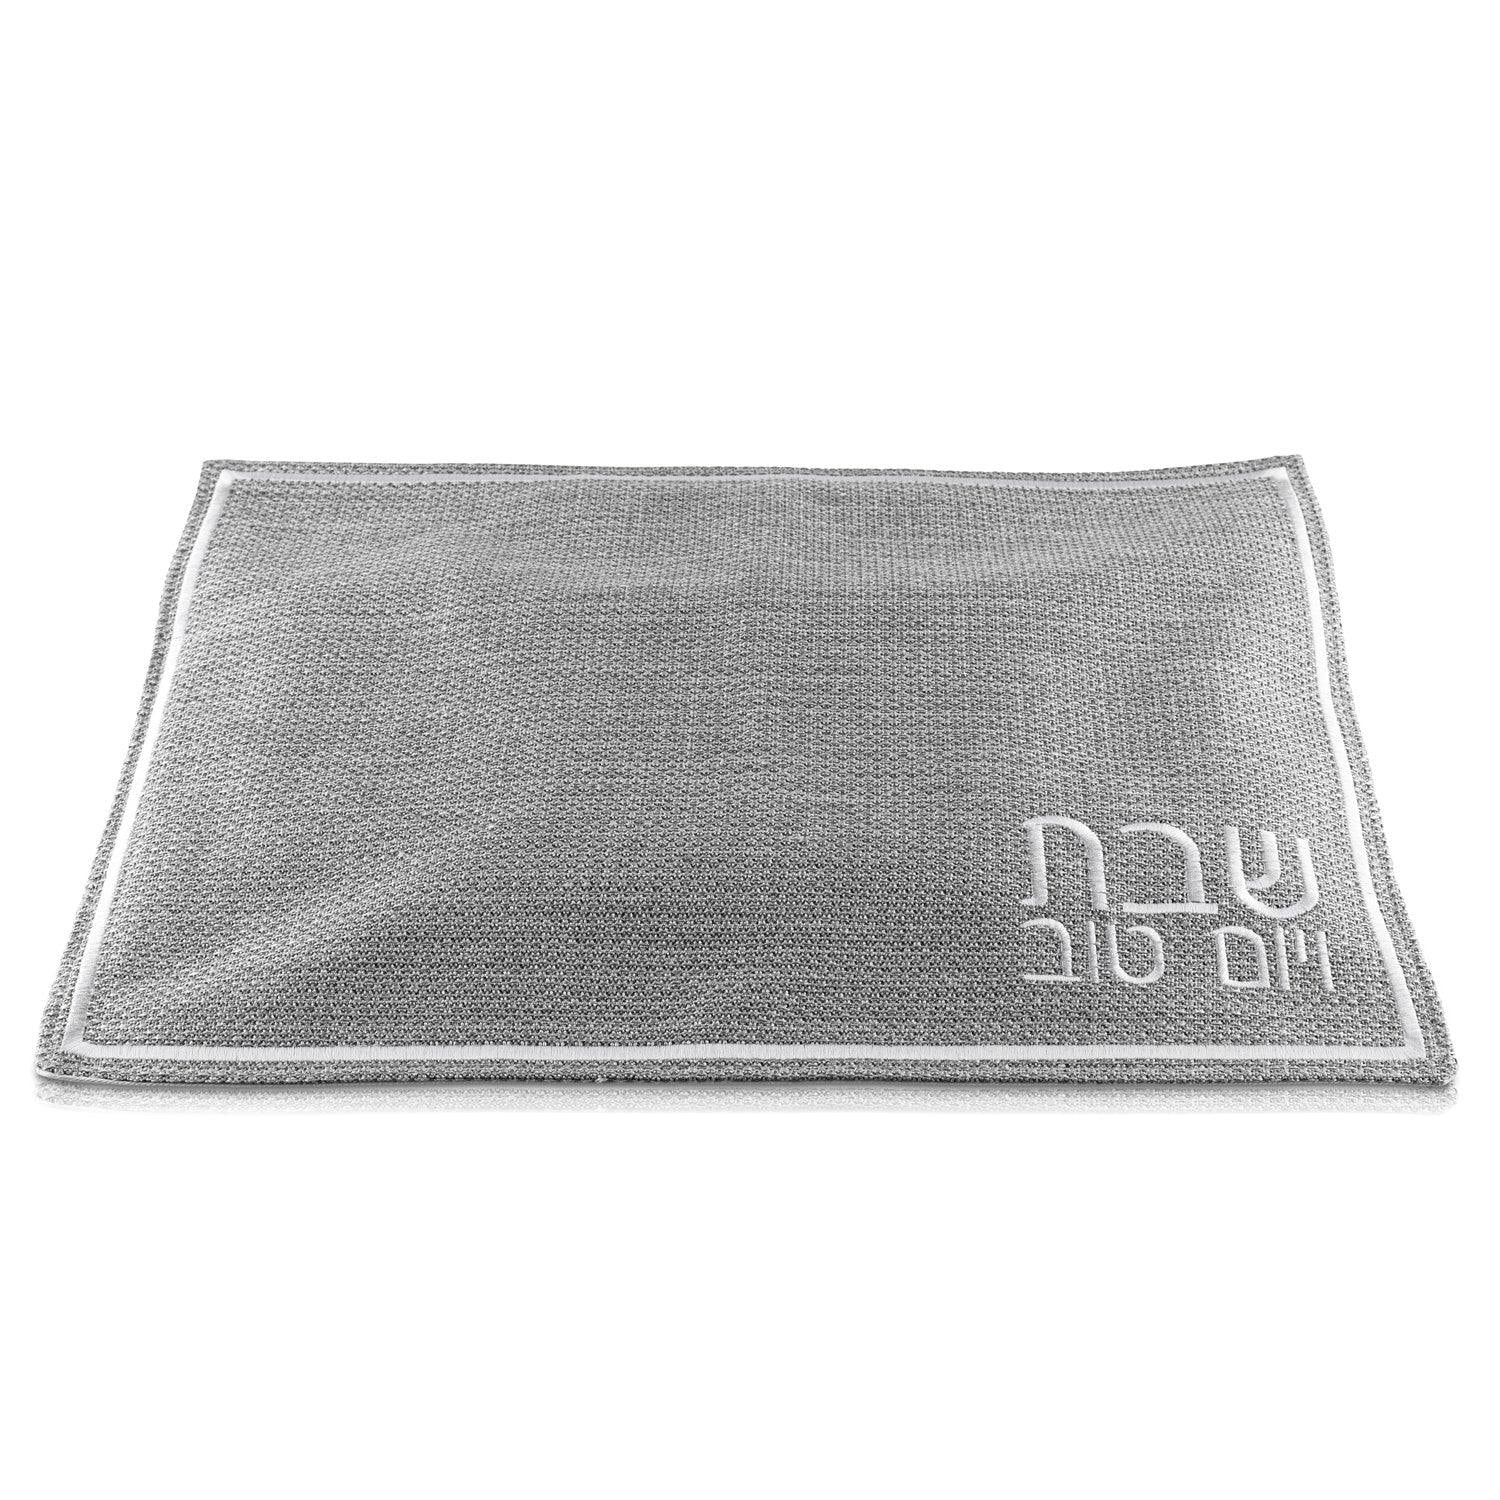 Fabric Challah Cover - Elegant Linen